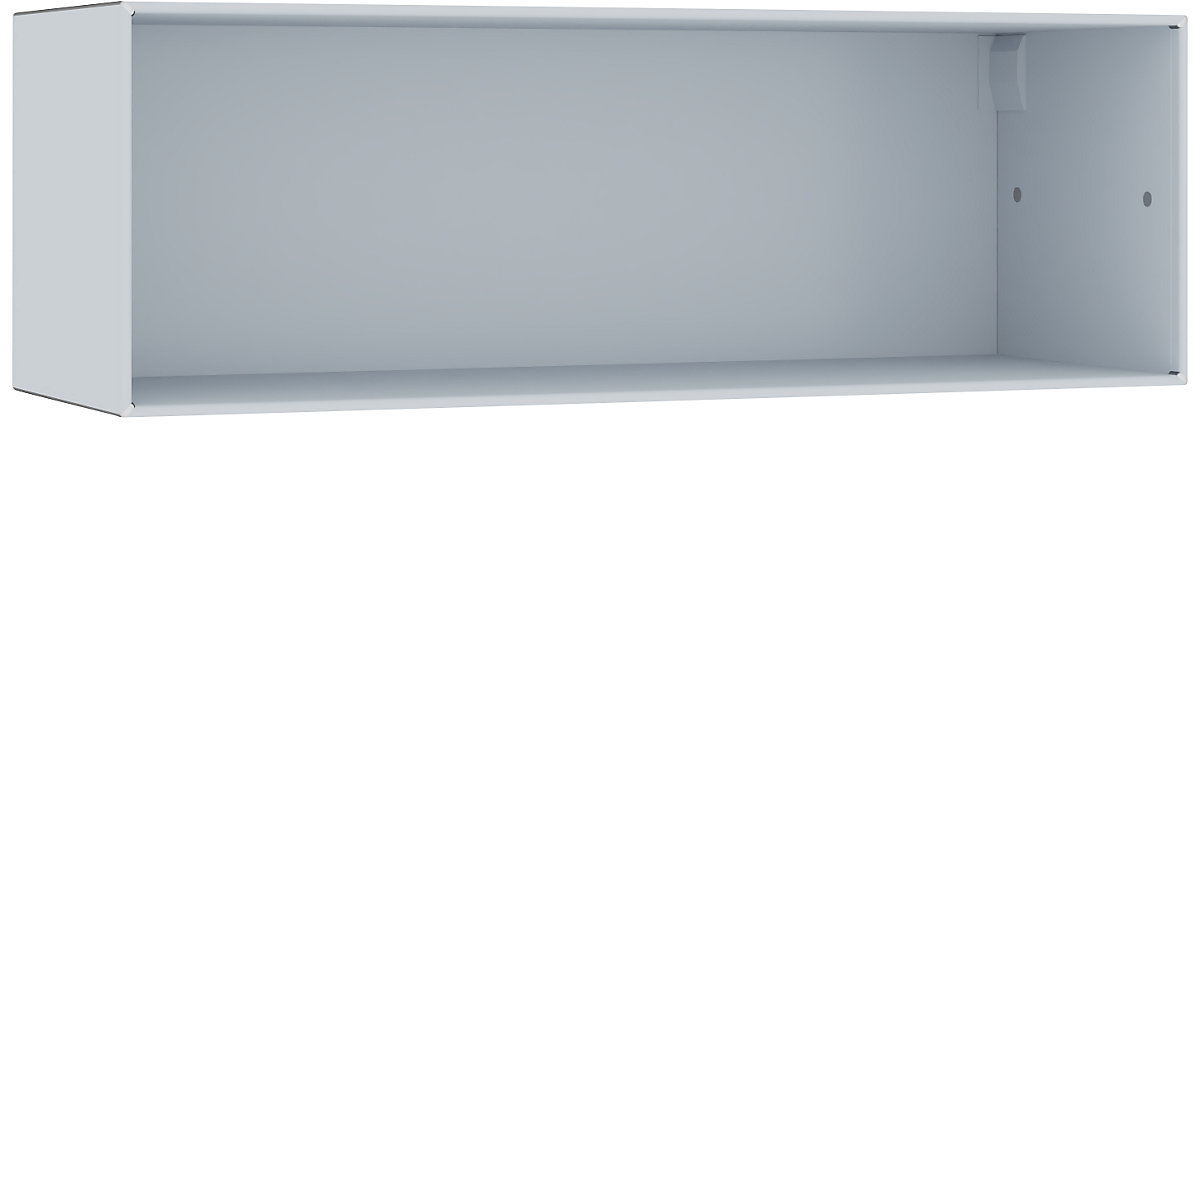 Compartimento individual abierto, para colgar – mauser, anchura 1155 mm, aluminio blanco-6